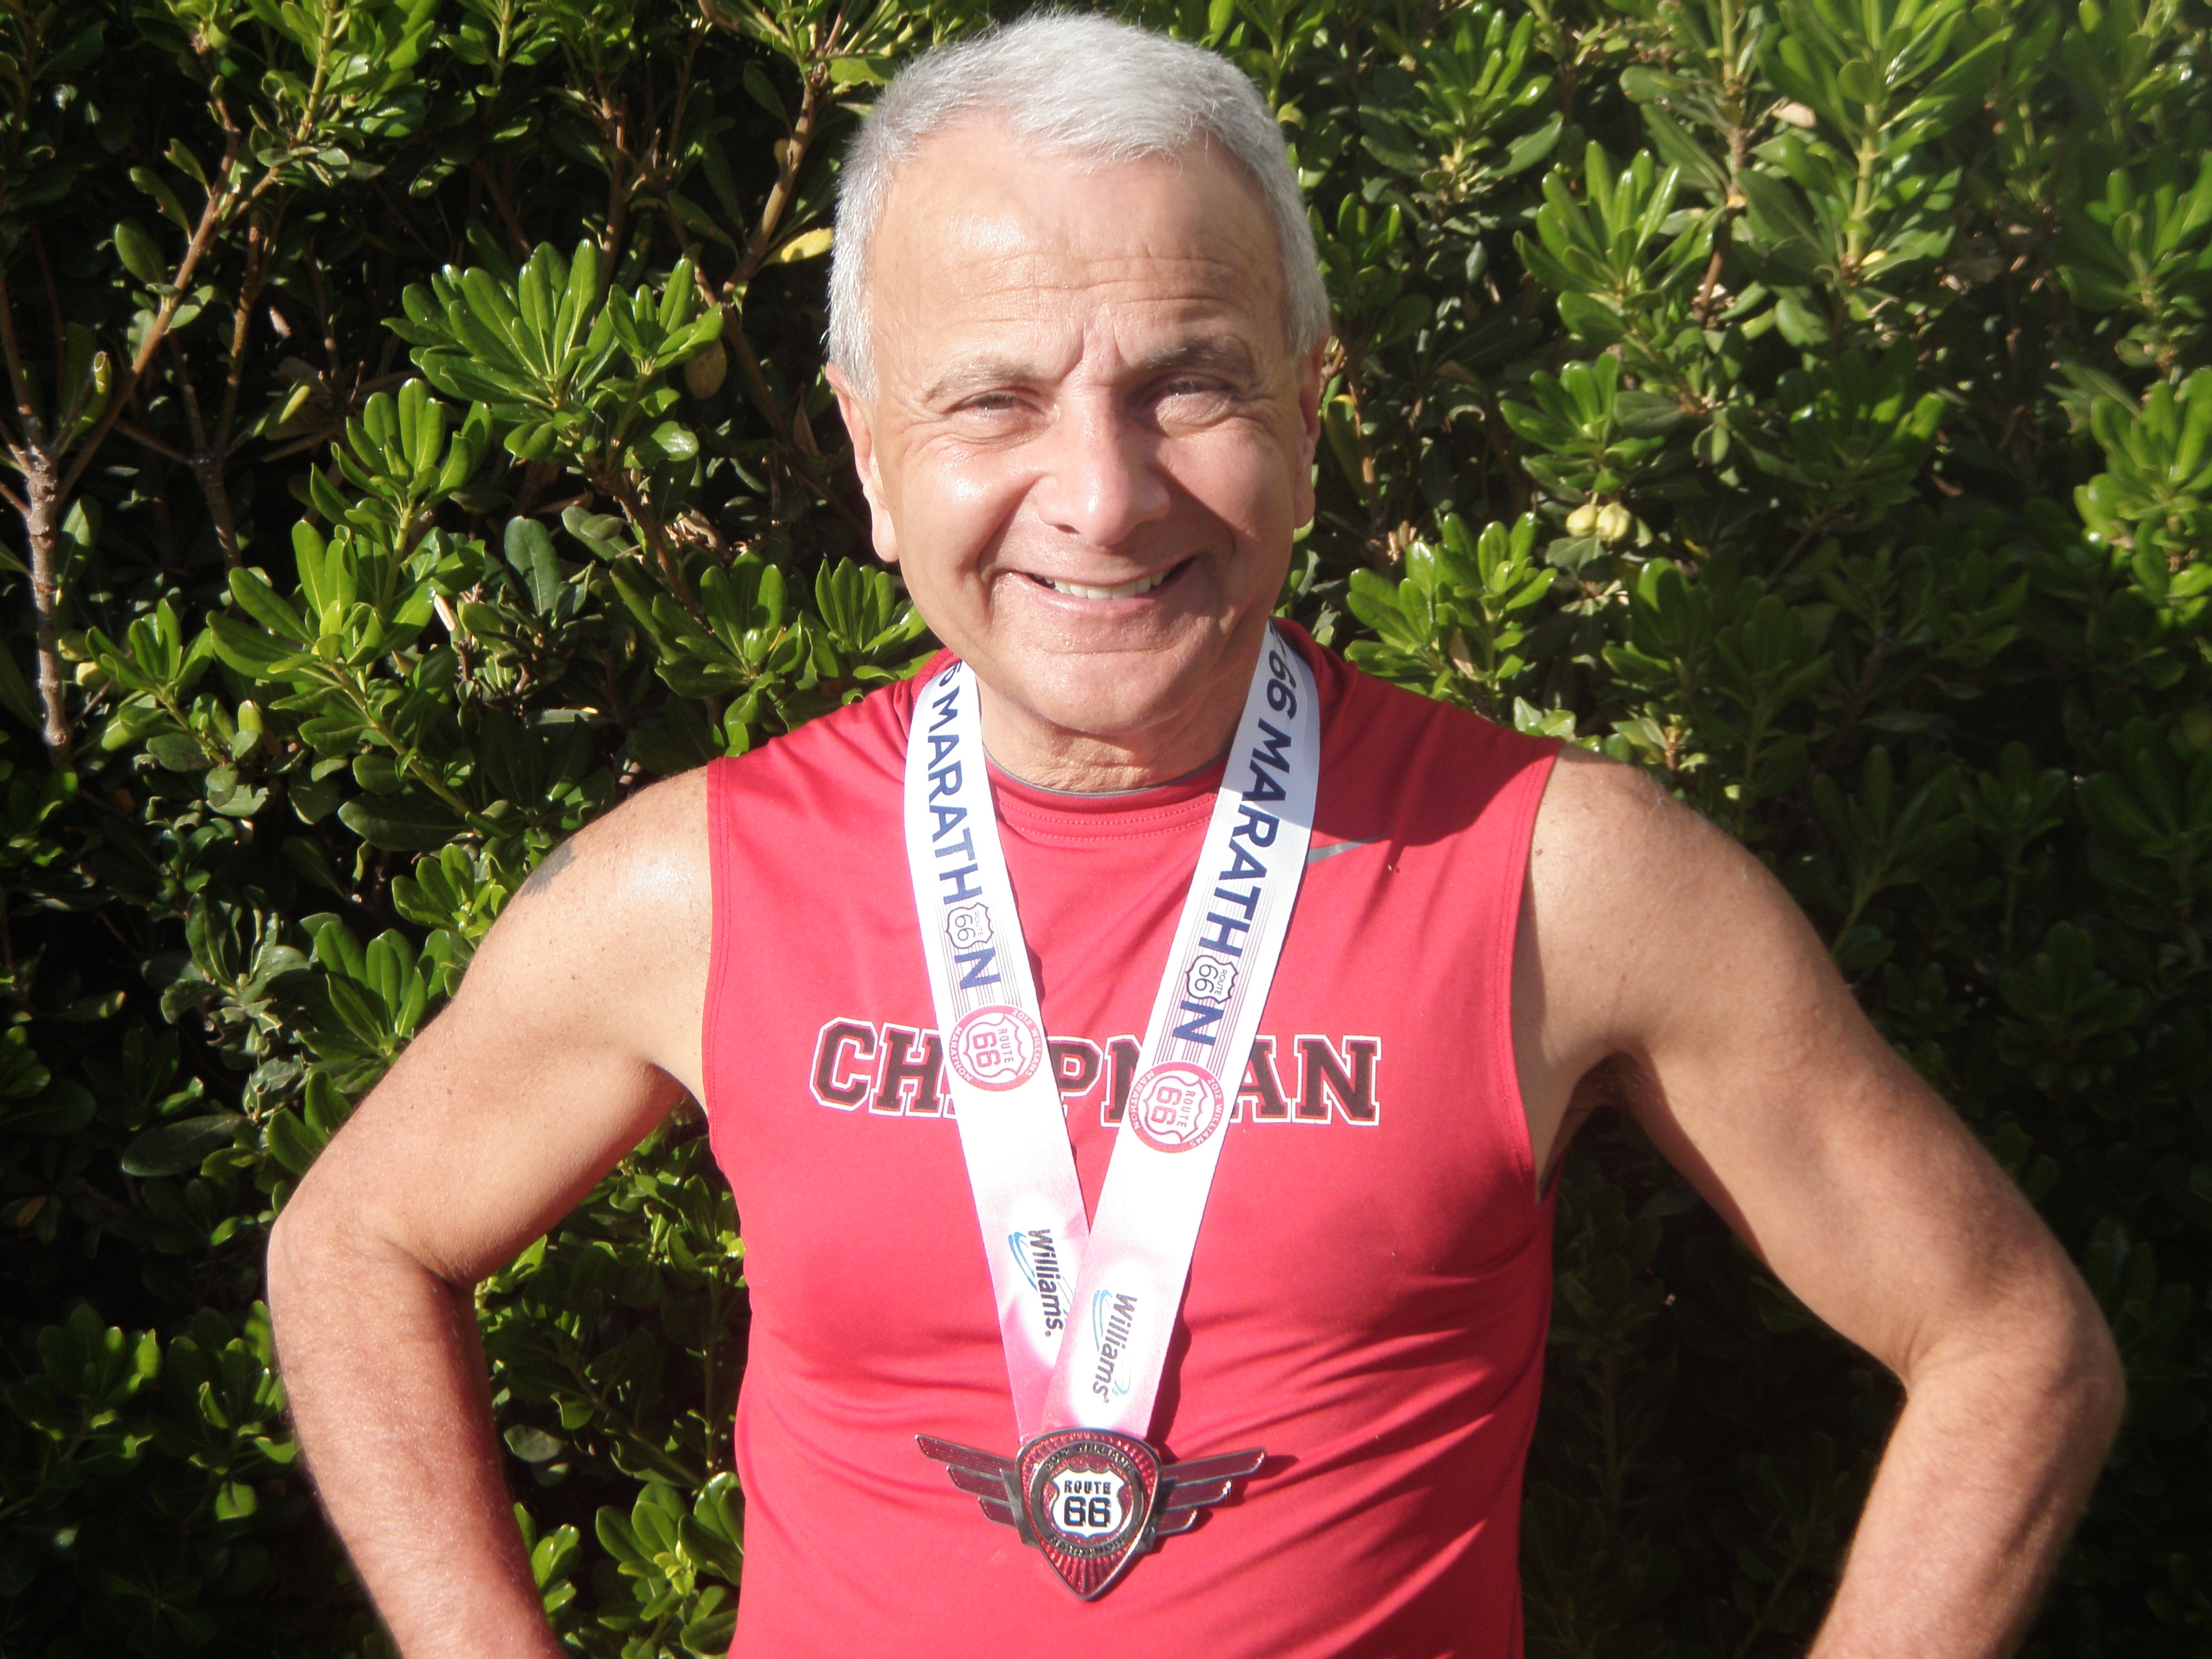 President Jim Doti displays the distinctive medal from the Williams Route 66 marathon.